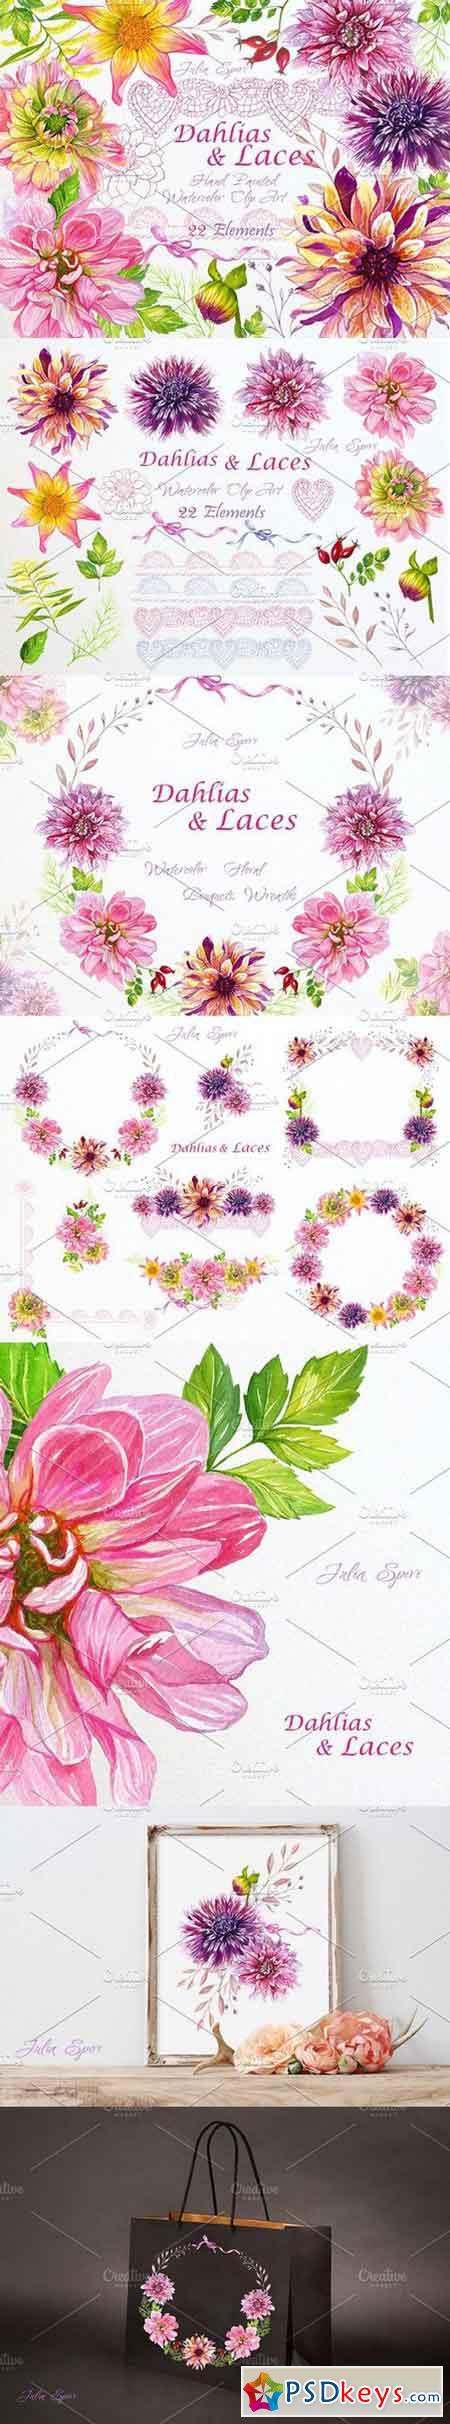 Watercolor Clip Art Dahlias & Laces 1401632